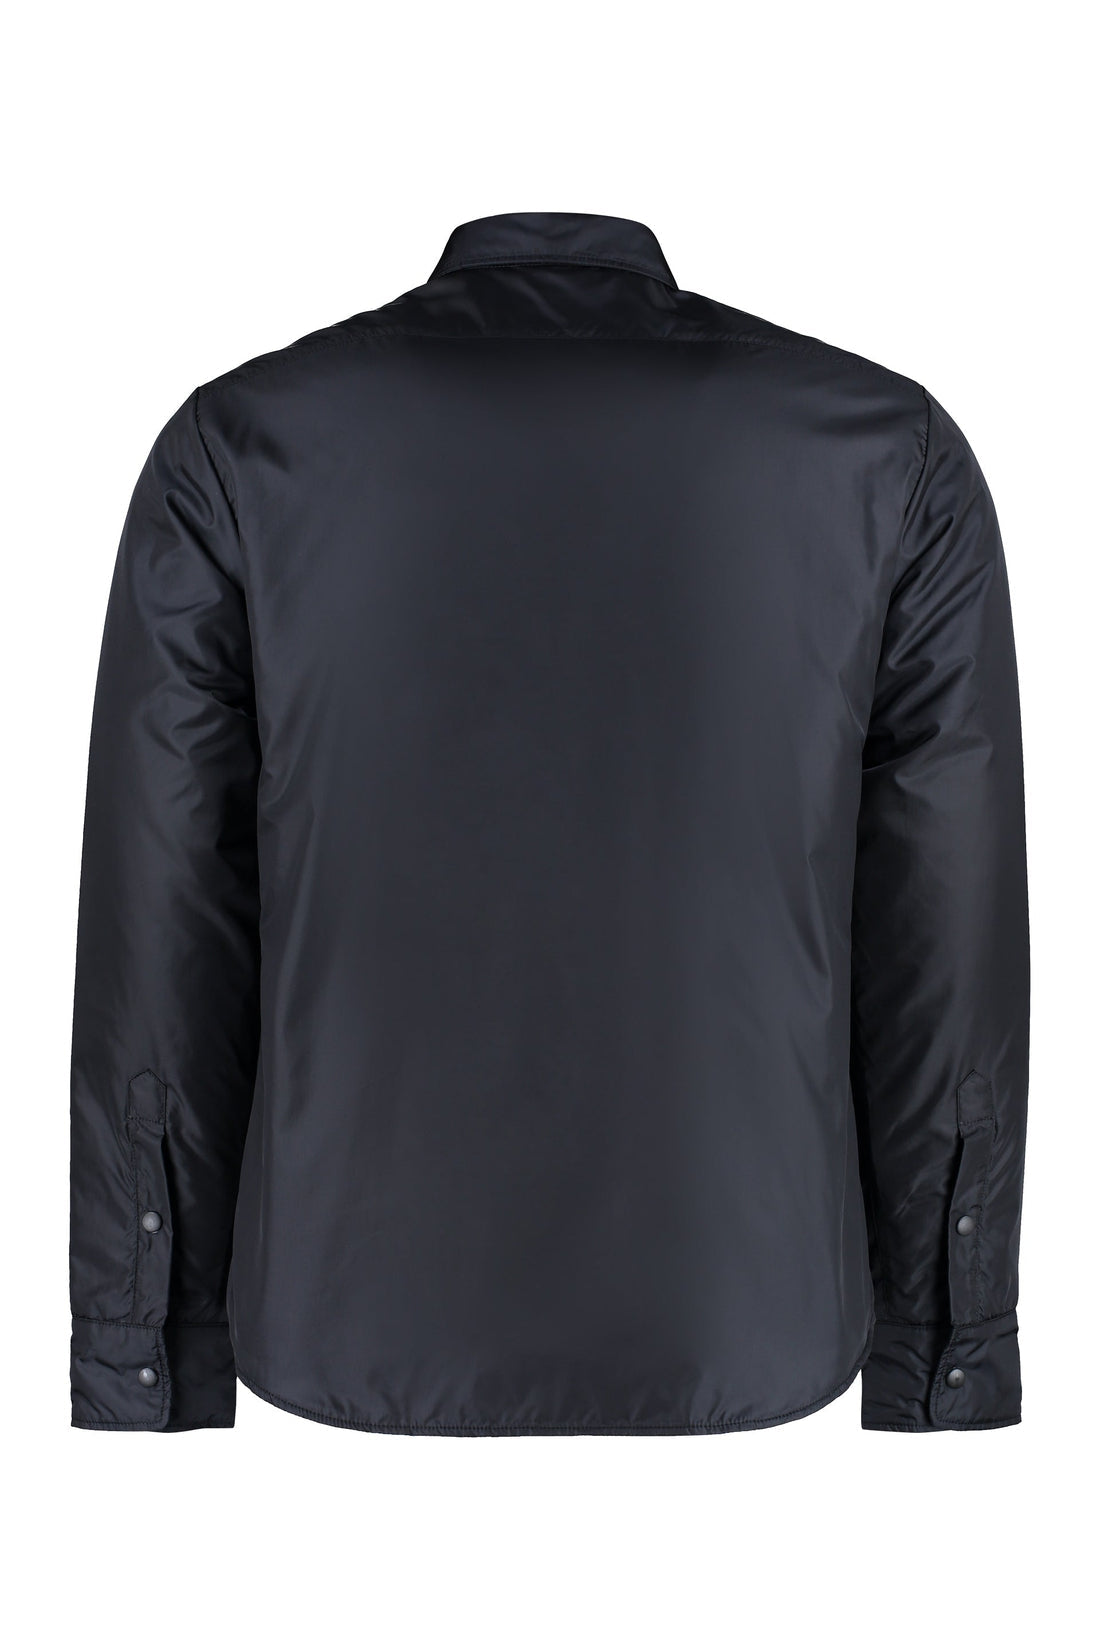 Aspesi-OUTLET-SALE-Re-Shirt nylon overshirt-ARCHIVIST